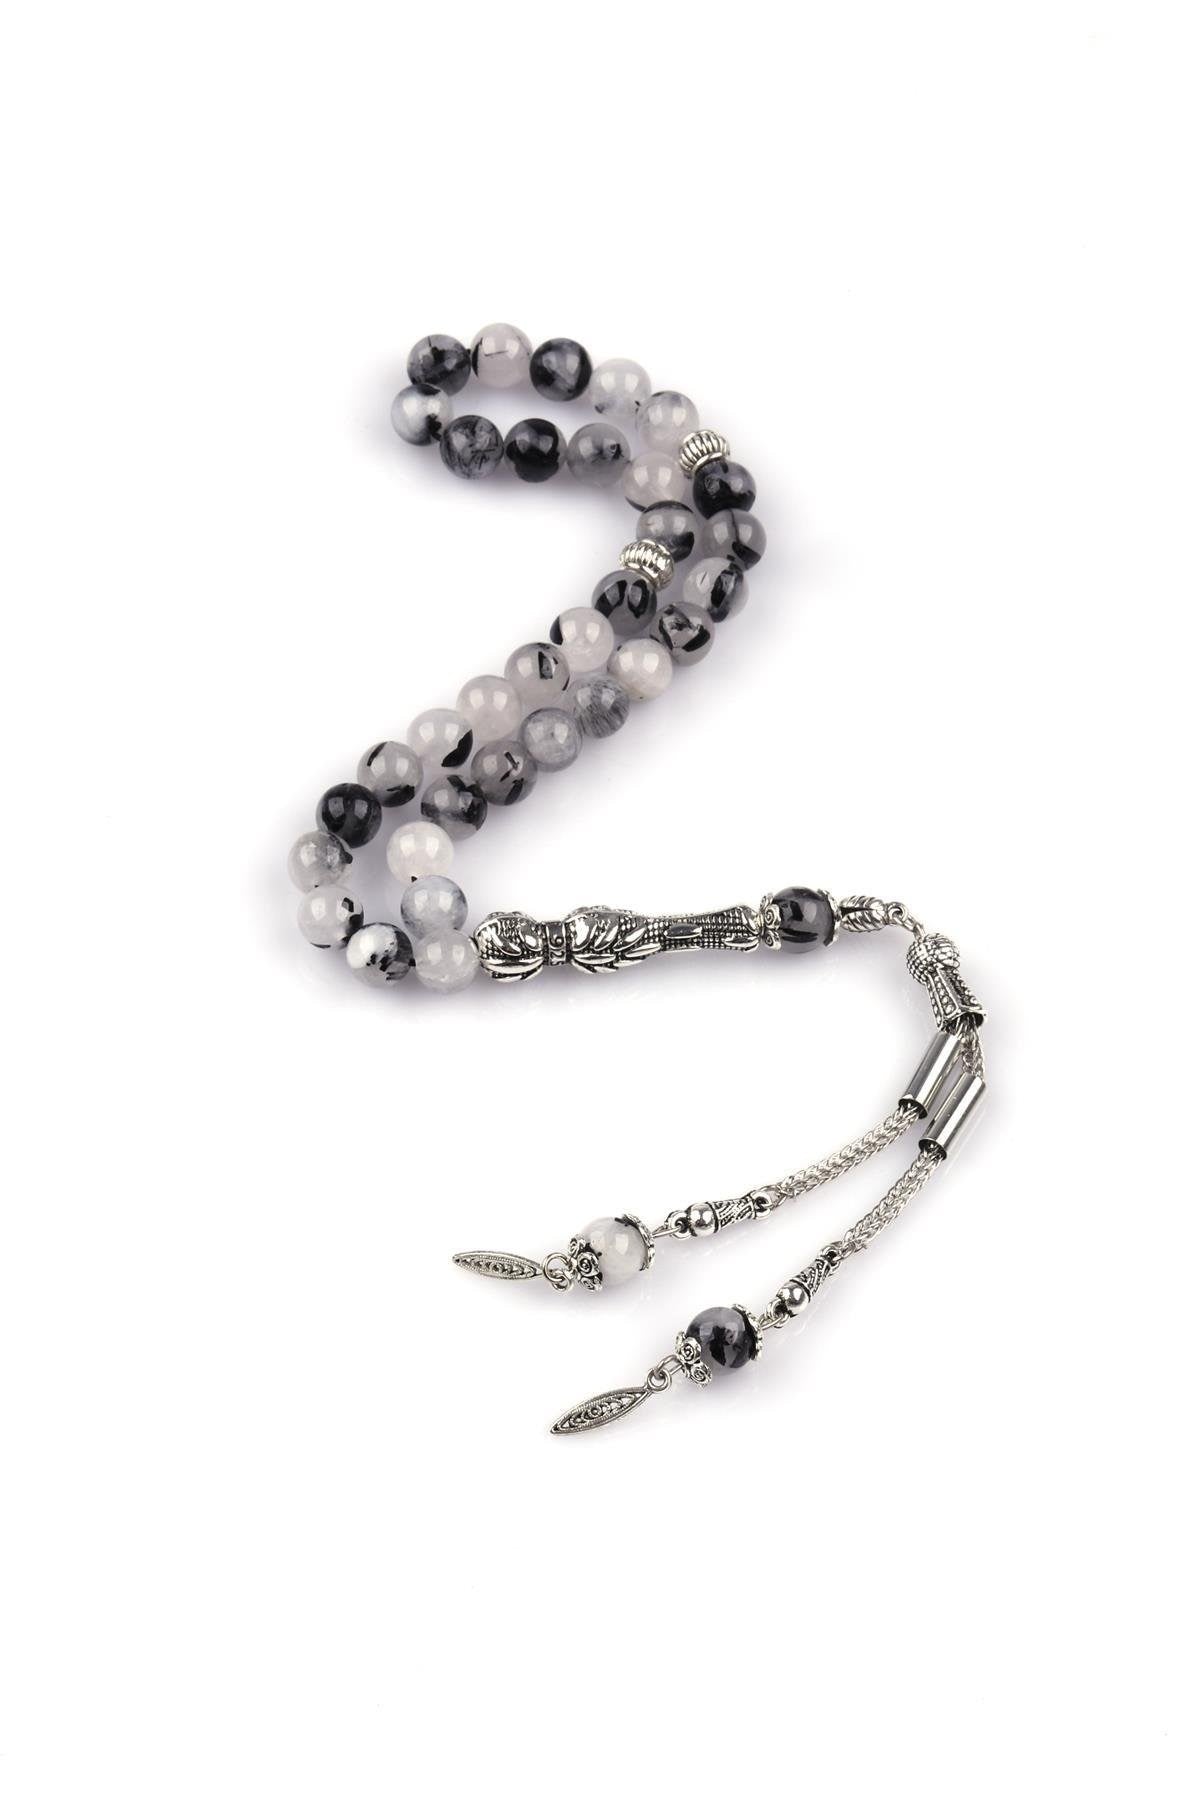 Rutile Quartz Gemstone Prayer Beads - 8mm / 33pc